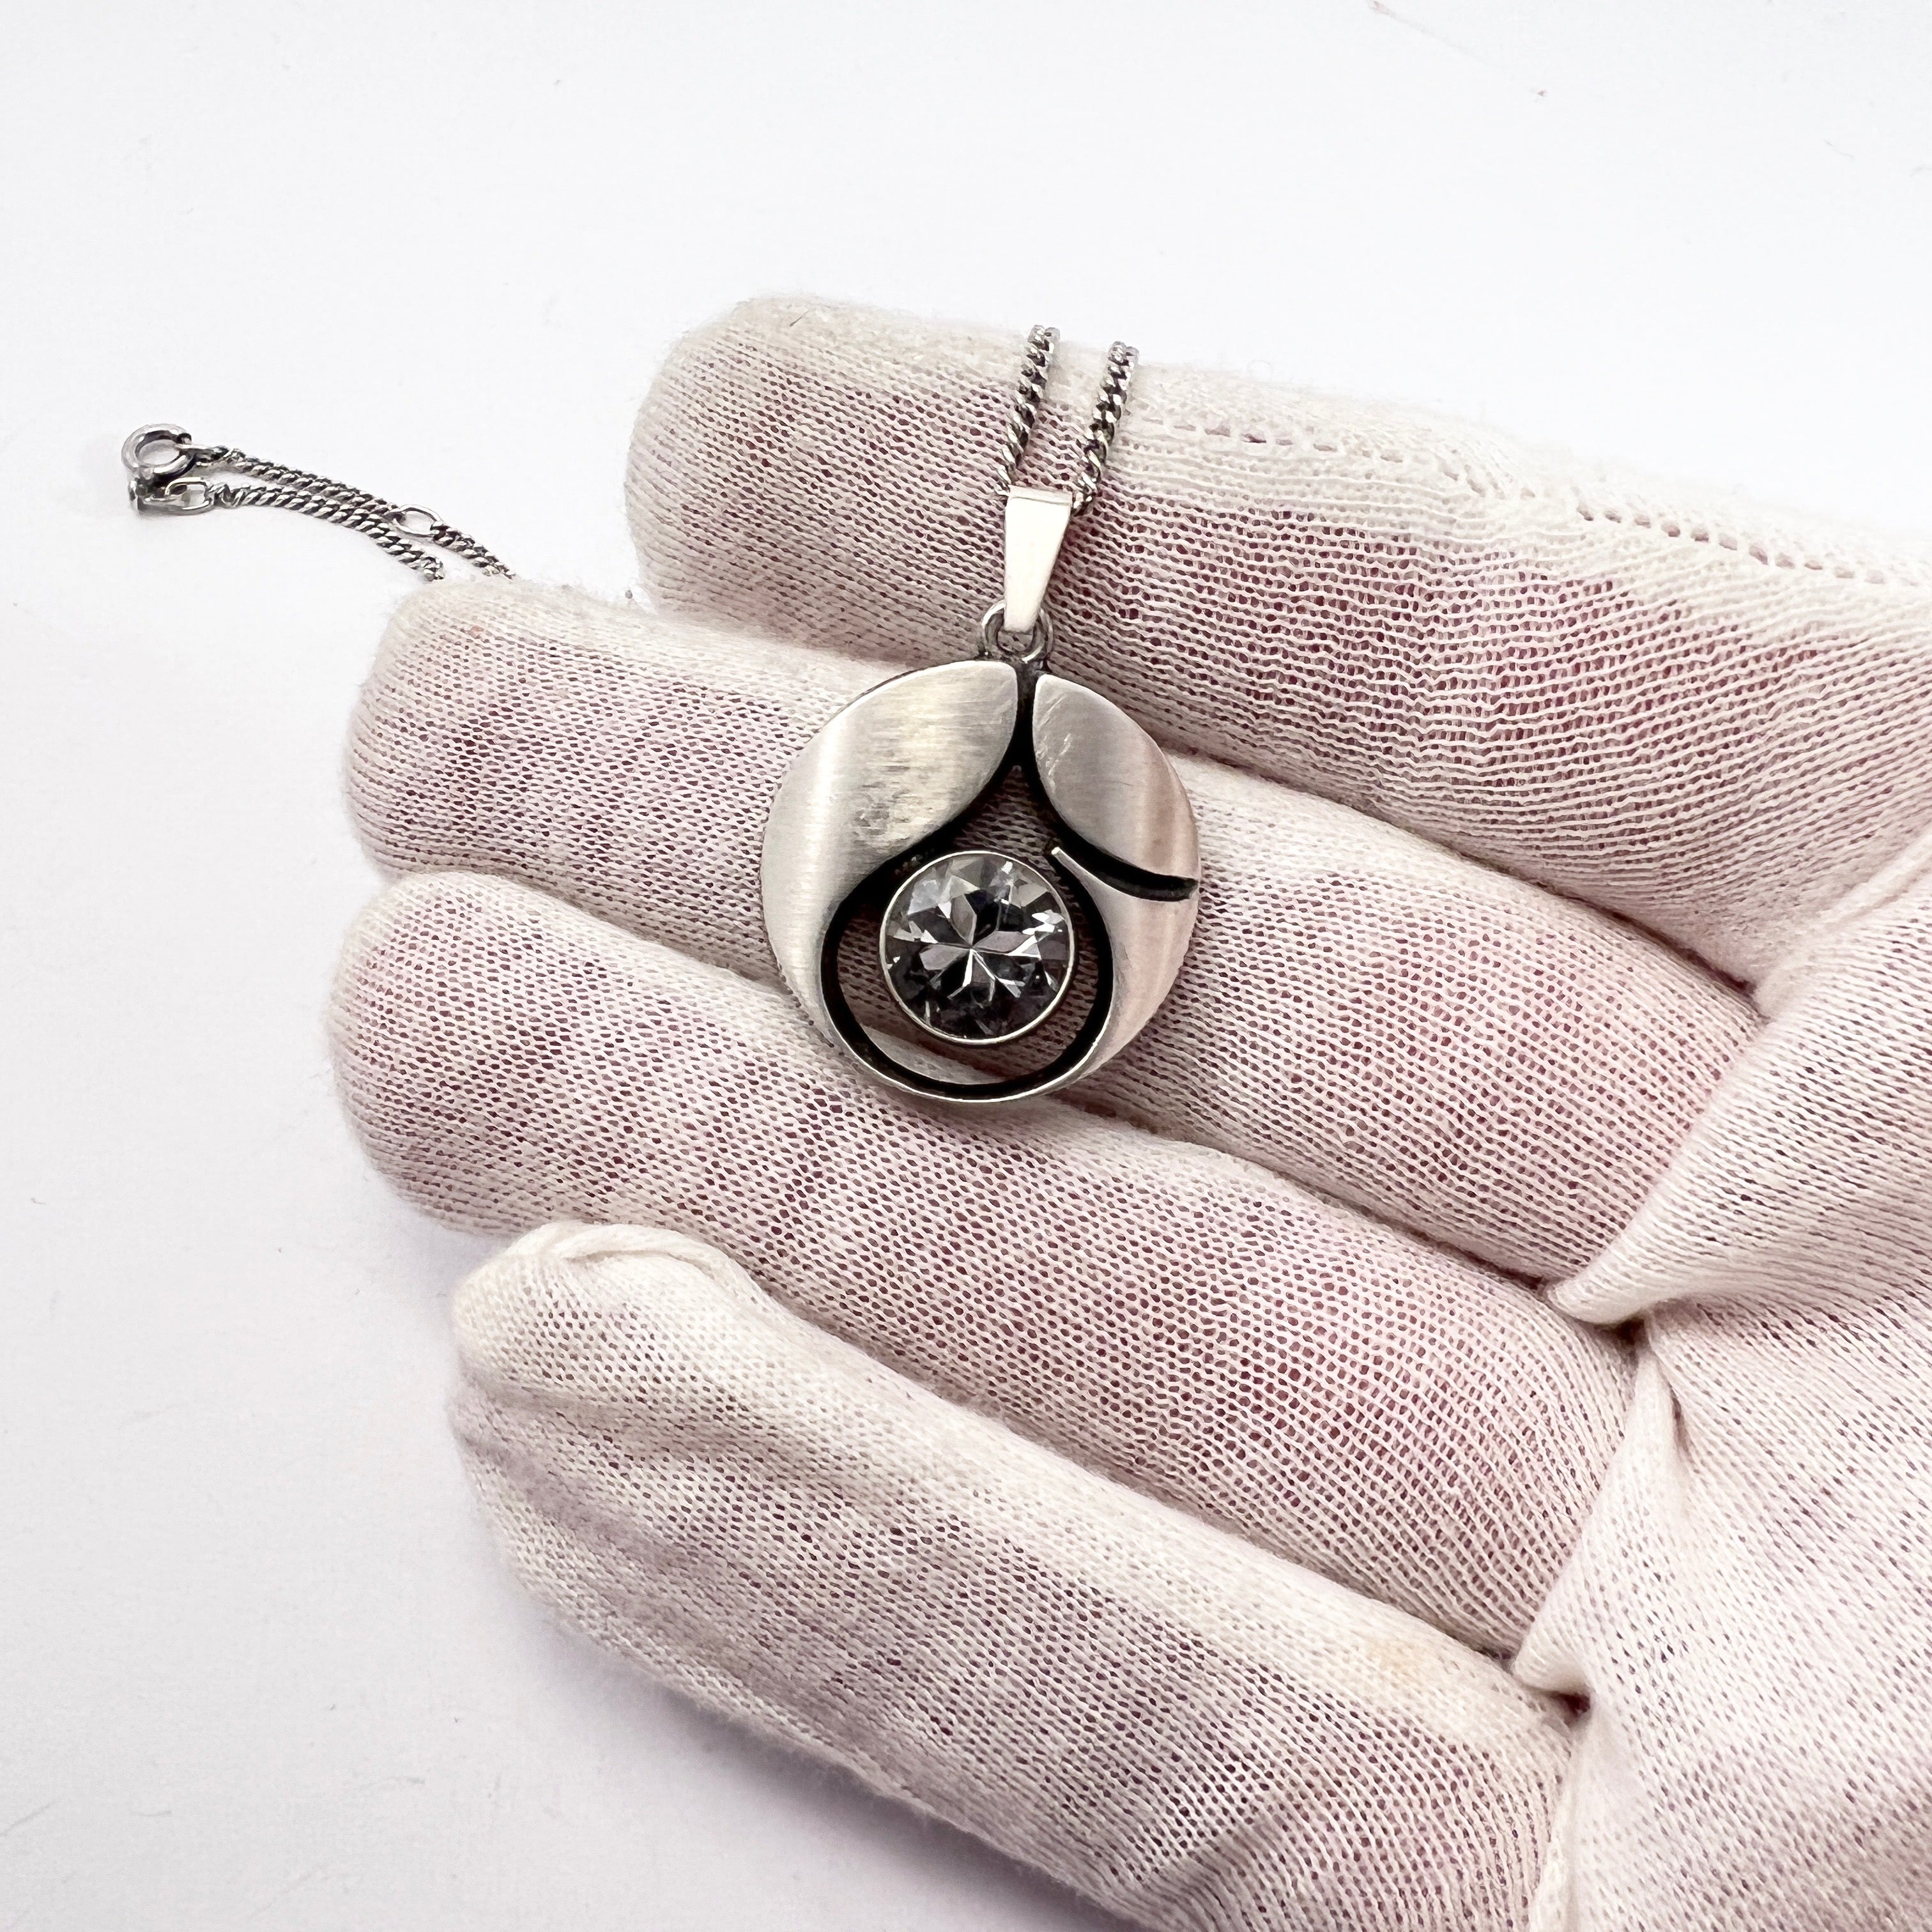 Karl Laine for Finn Feelings, Finland Vintage Sterling Silver Rock Crystal Pendant Necklace.